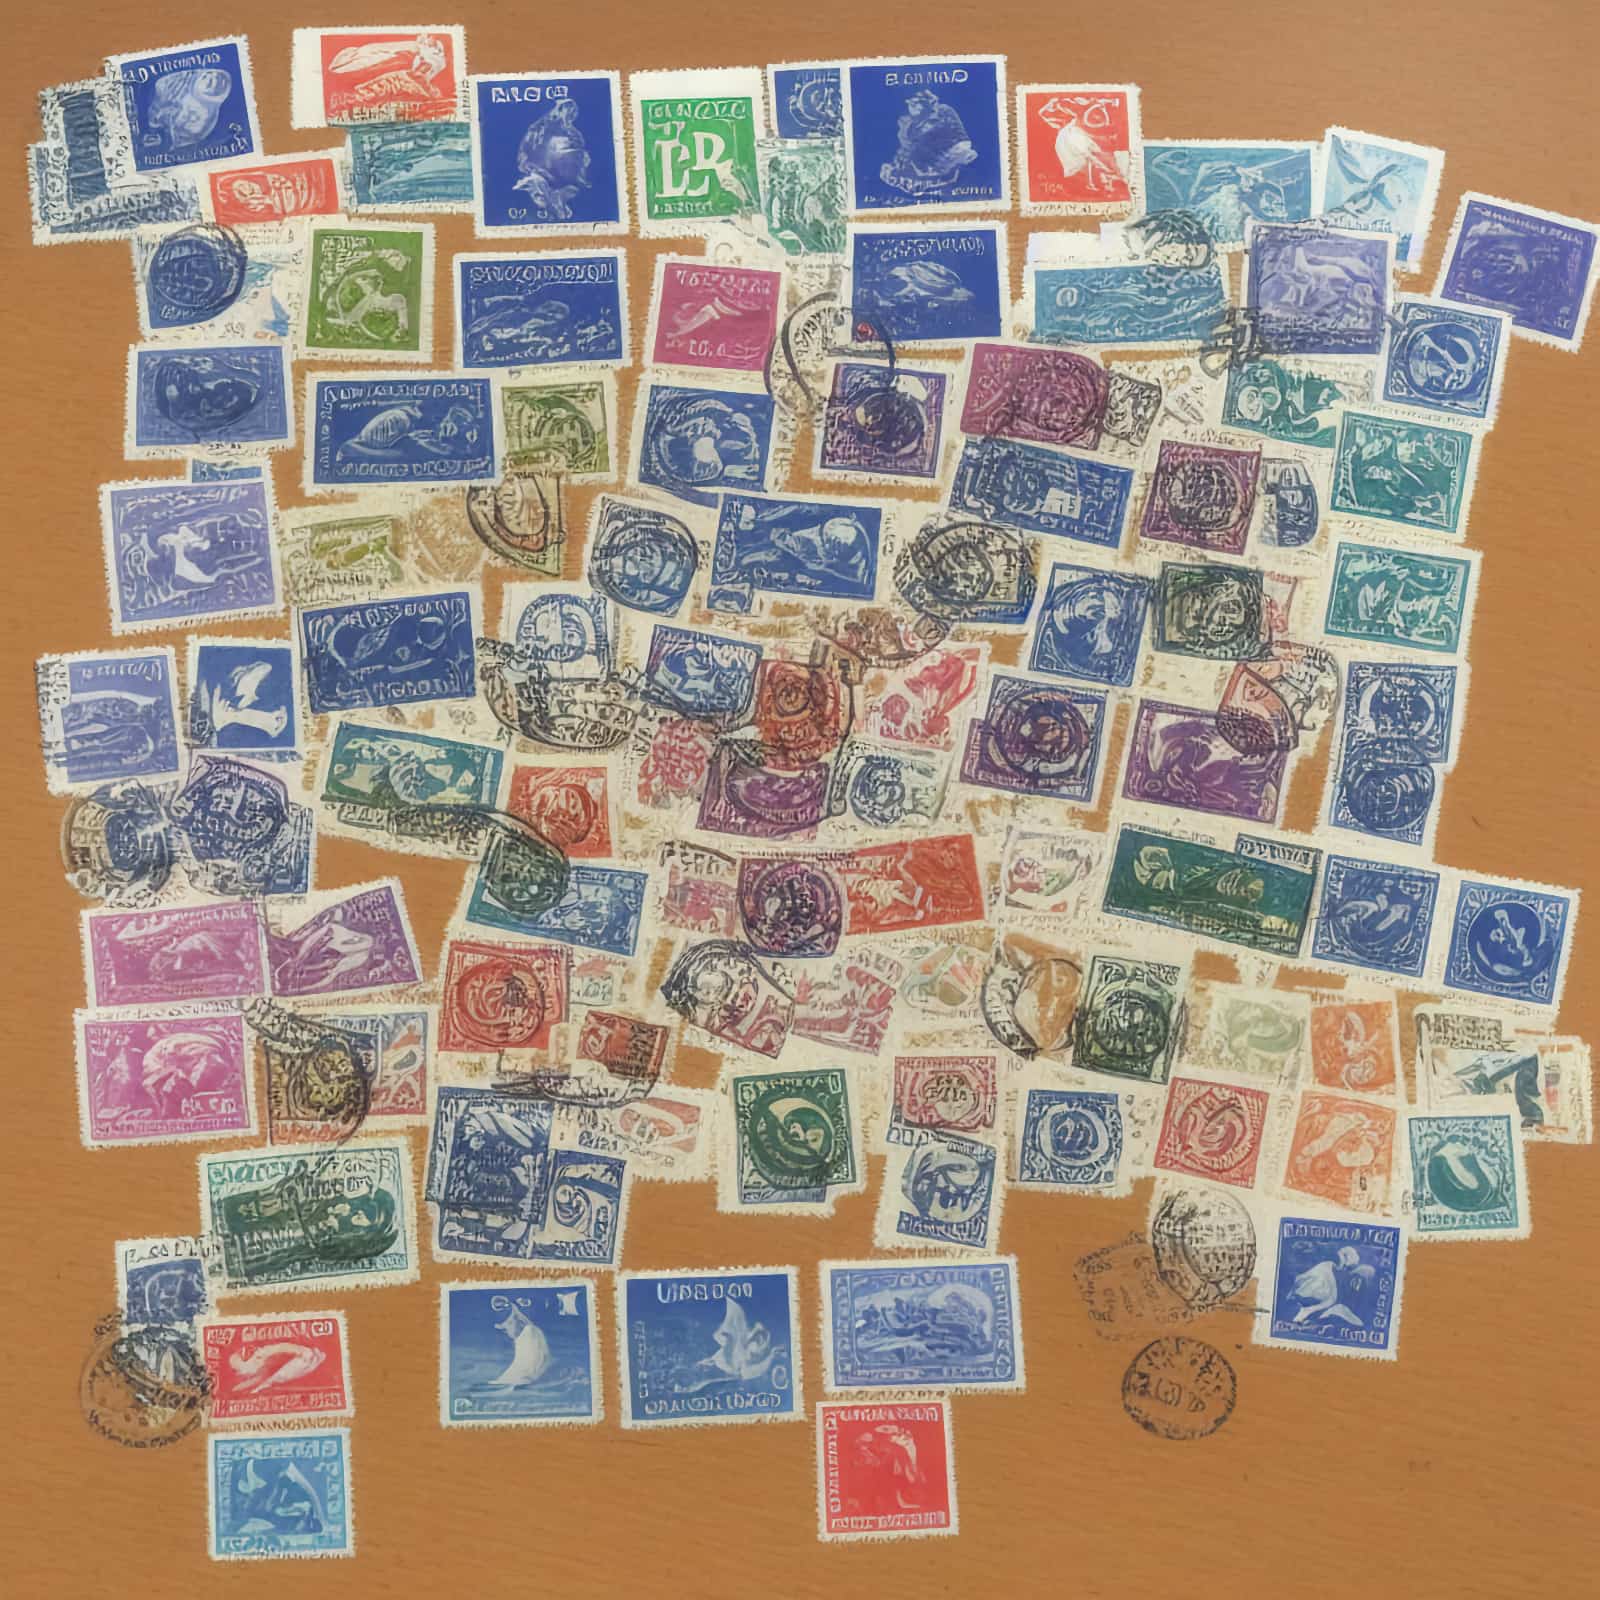 UK stamps British stamps Royal Mail parcelforce parcelfarce Royal Mail